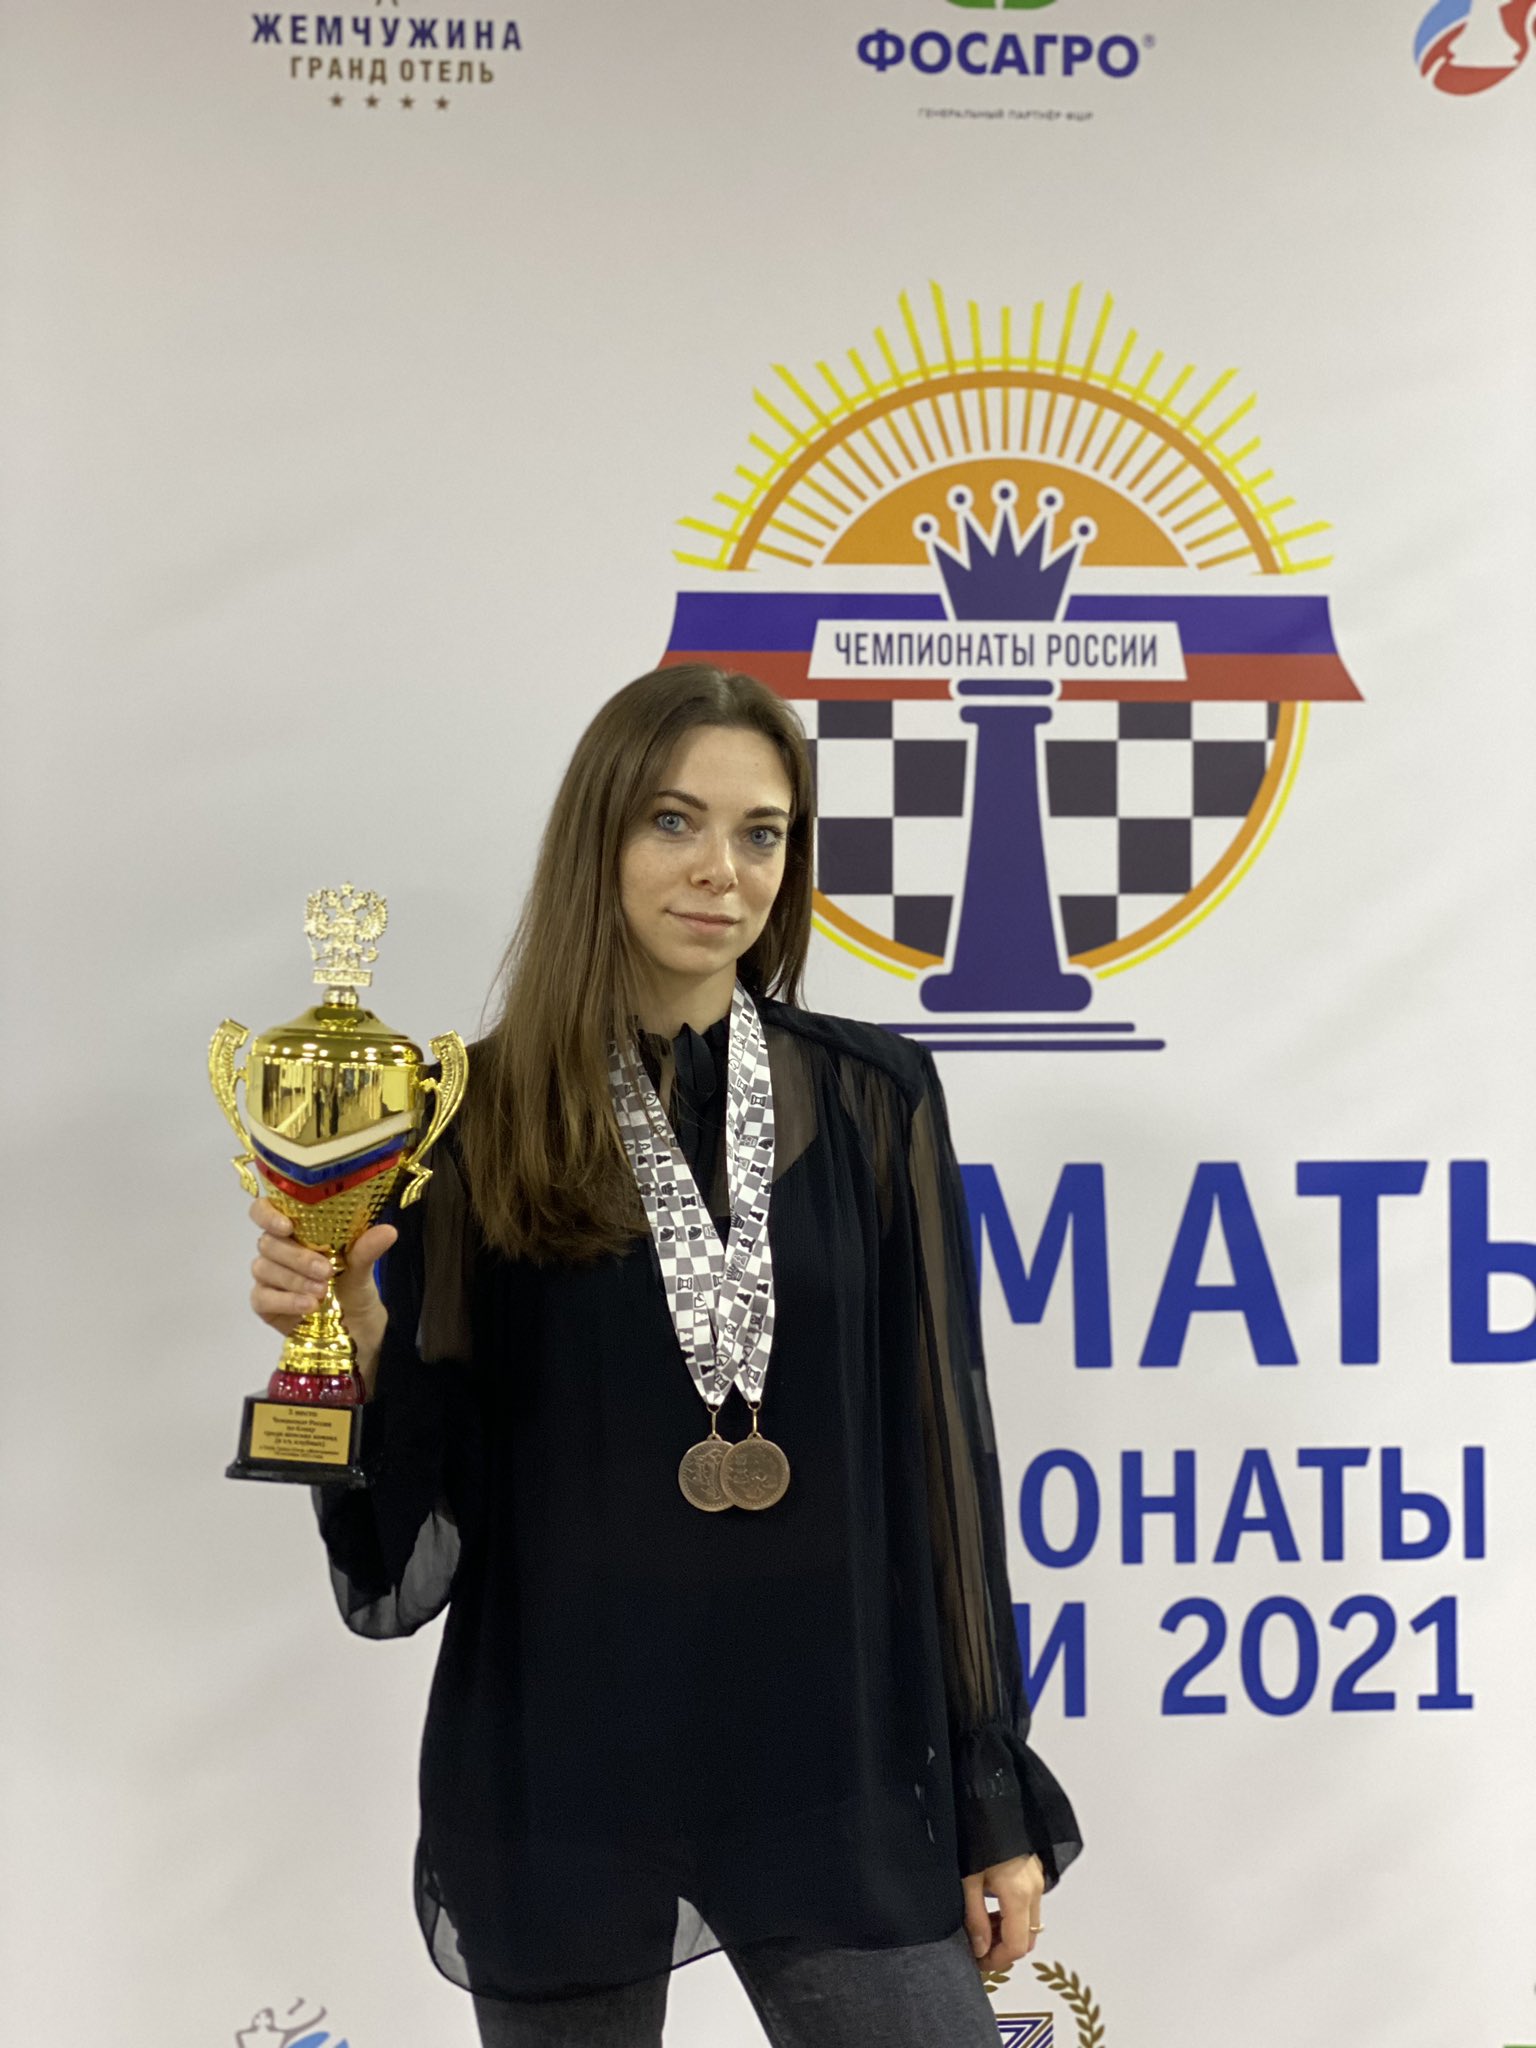 Dina Belenkaya on X: Two medals in one week 🥇🇮🇱🥉🇫🇷 Next